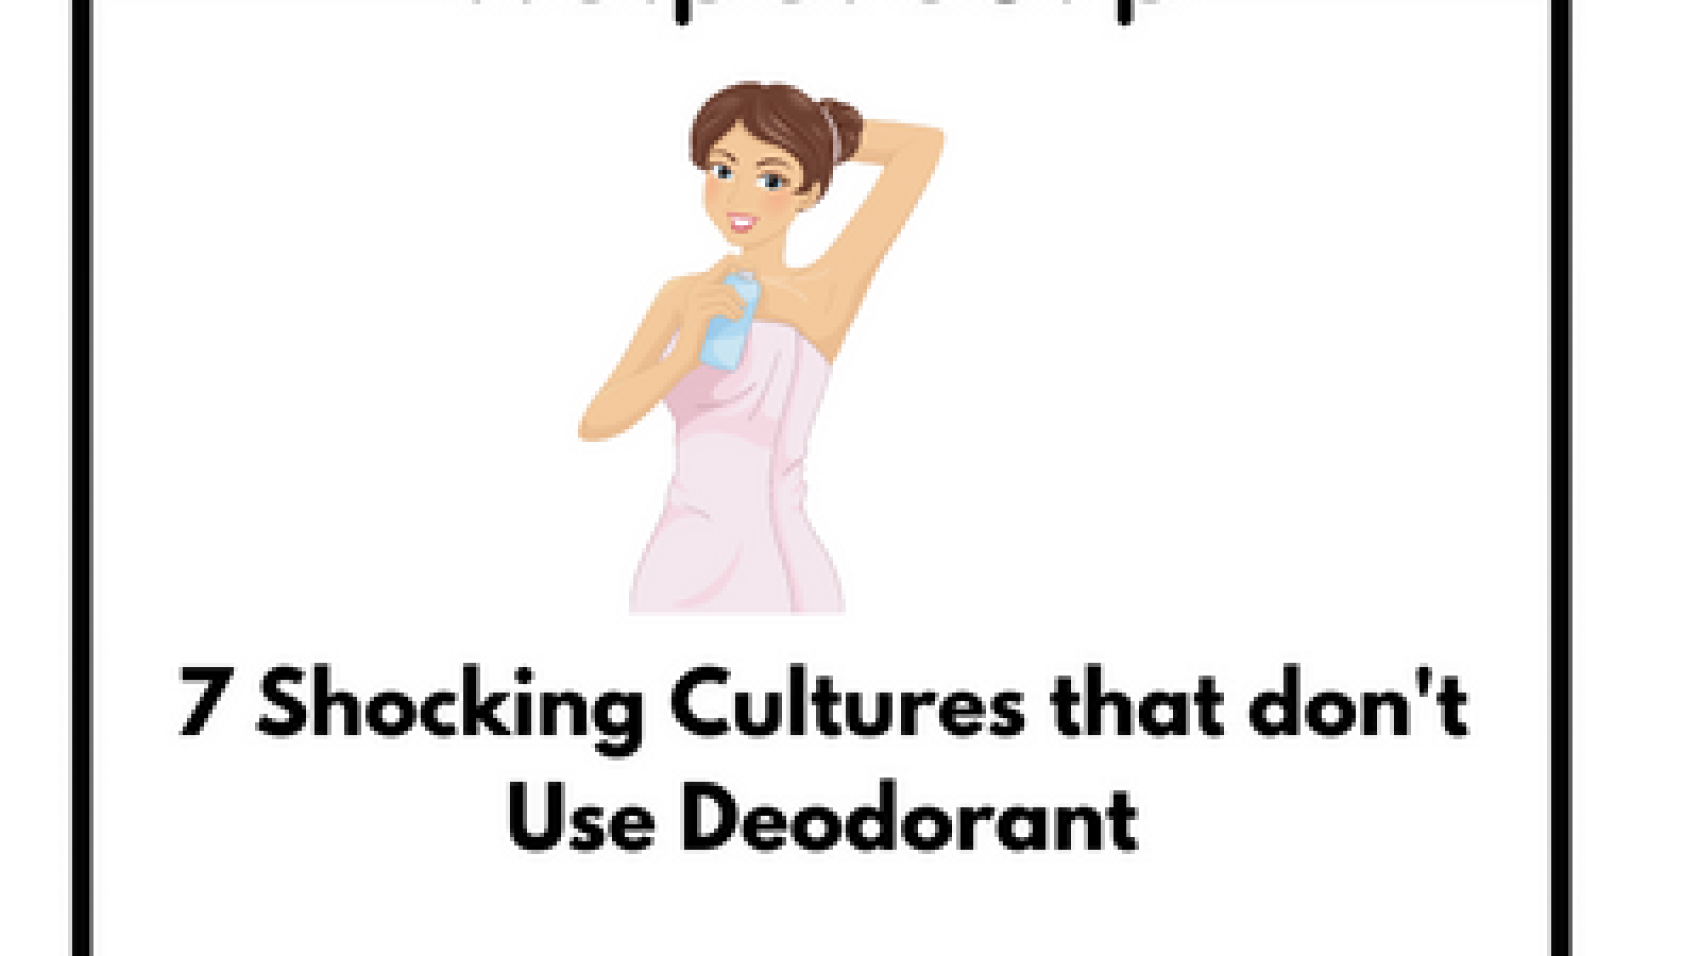 Cultural Deodorant Differences